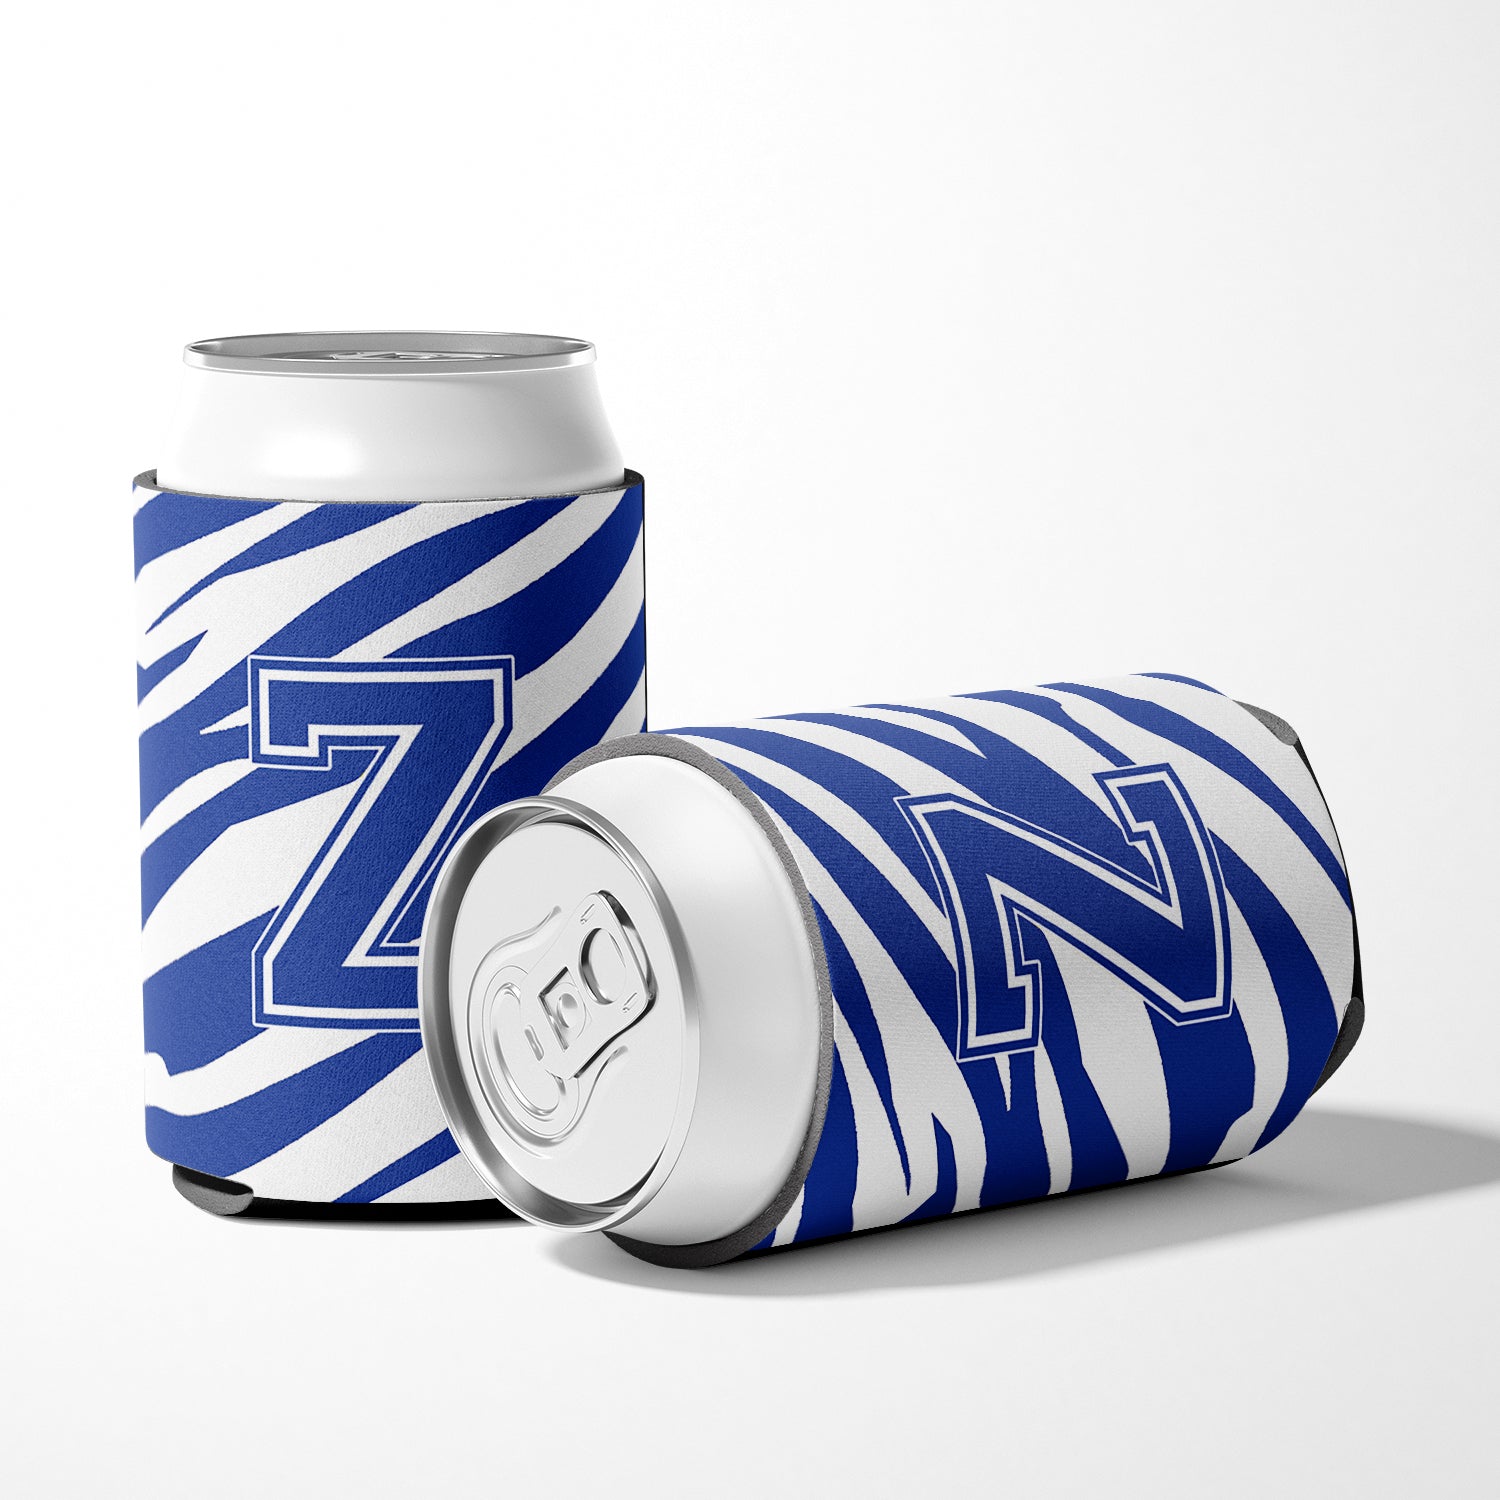 Monogramme initial de la lettre Z - Tiger Stripe Blue and White Can Beverage Insulator Hugger